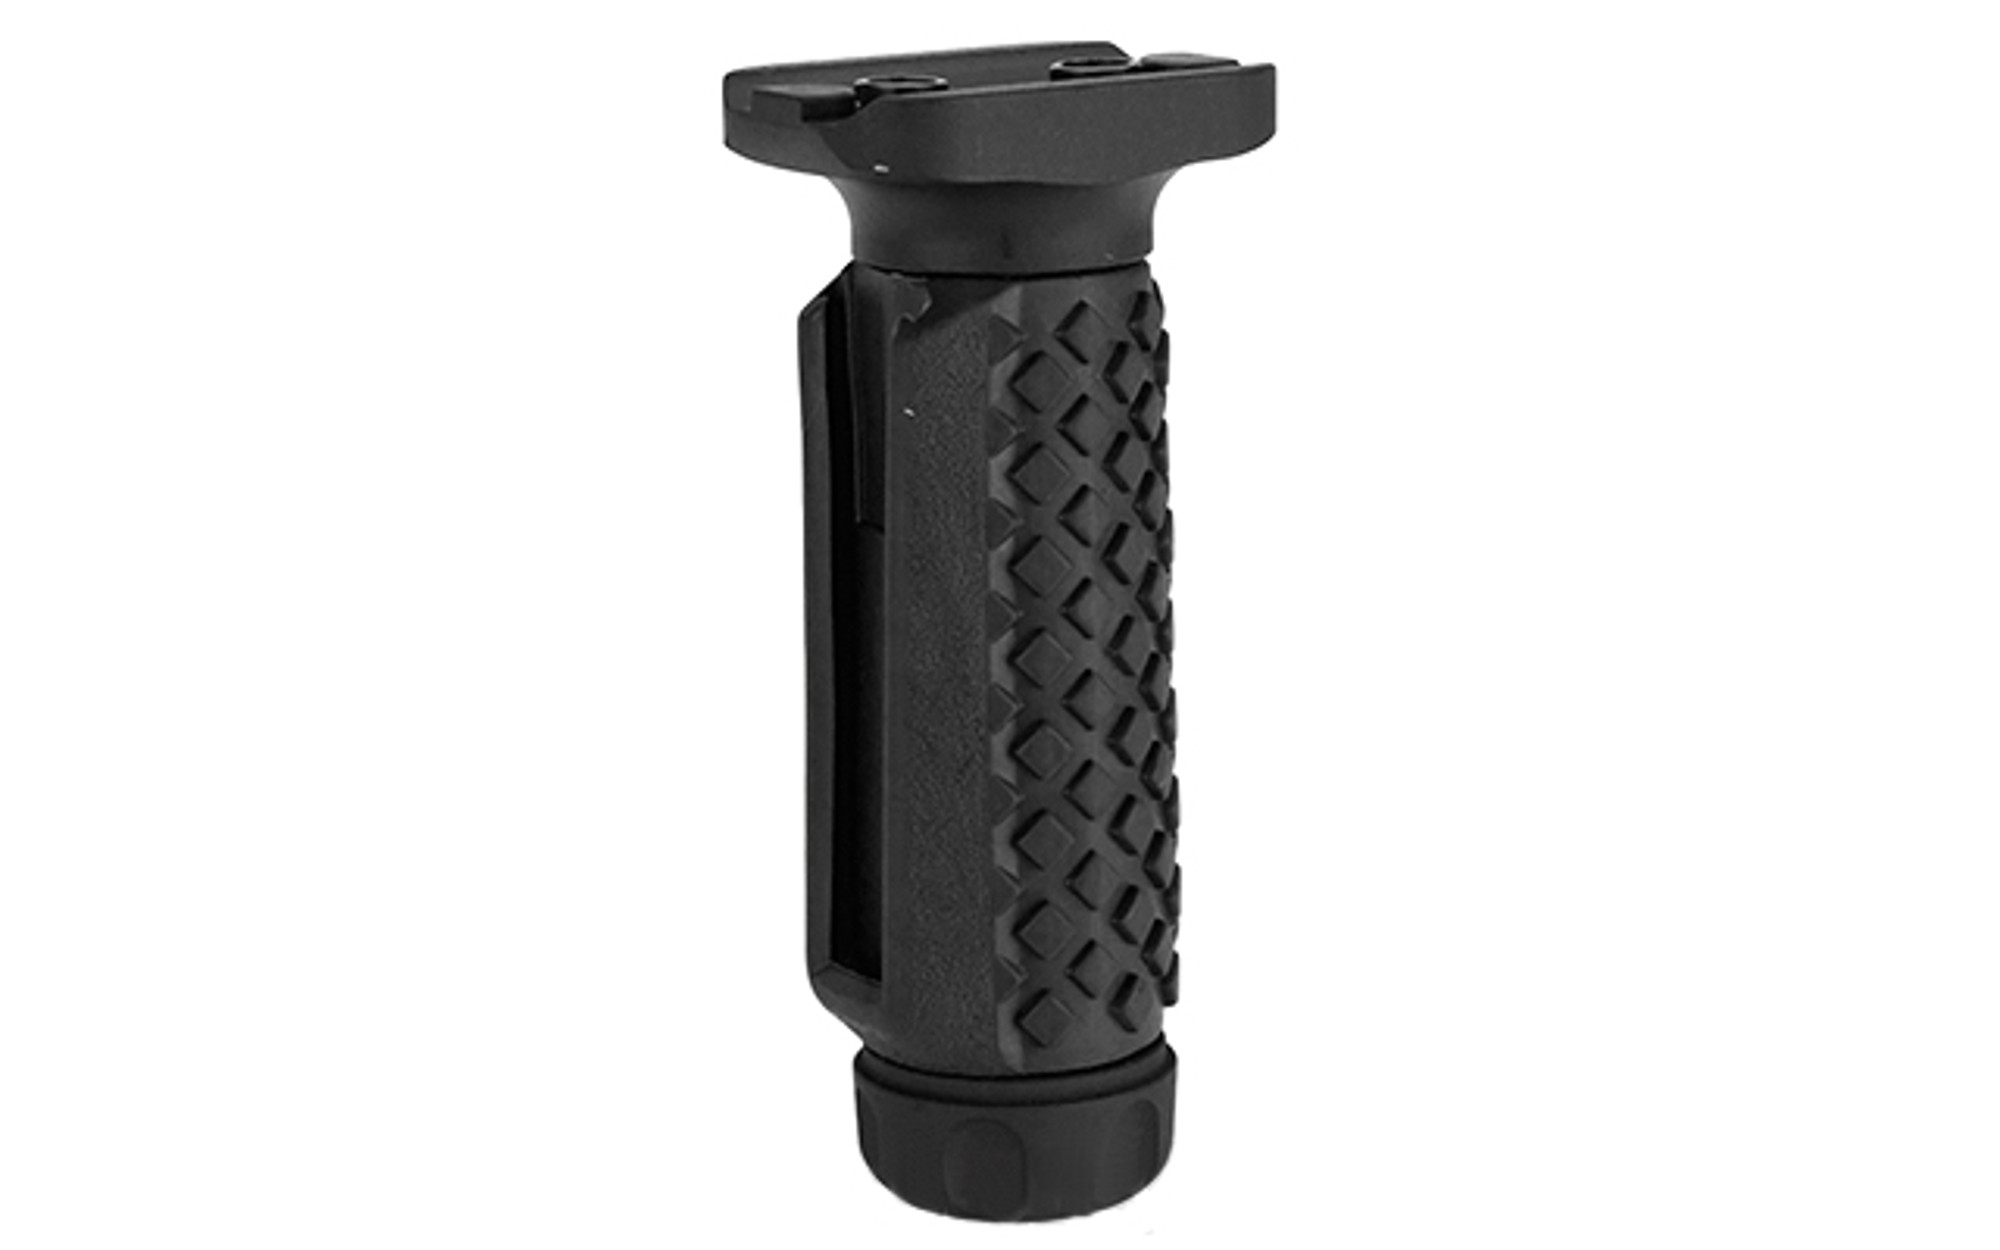 G&P Keymod Tactical Remote Switch Aluminum / Rubber Vertical Grip - Black (Long)